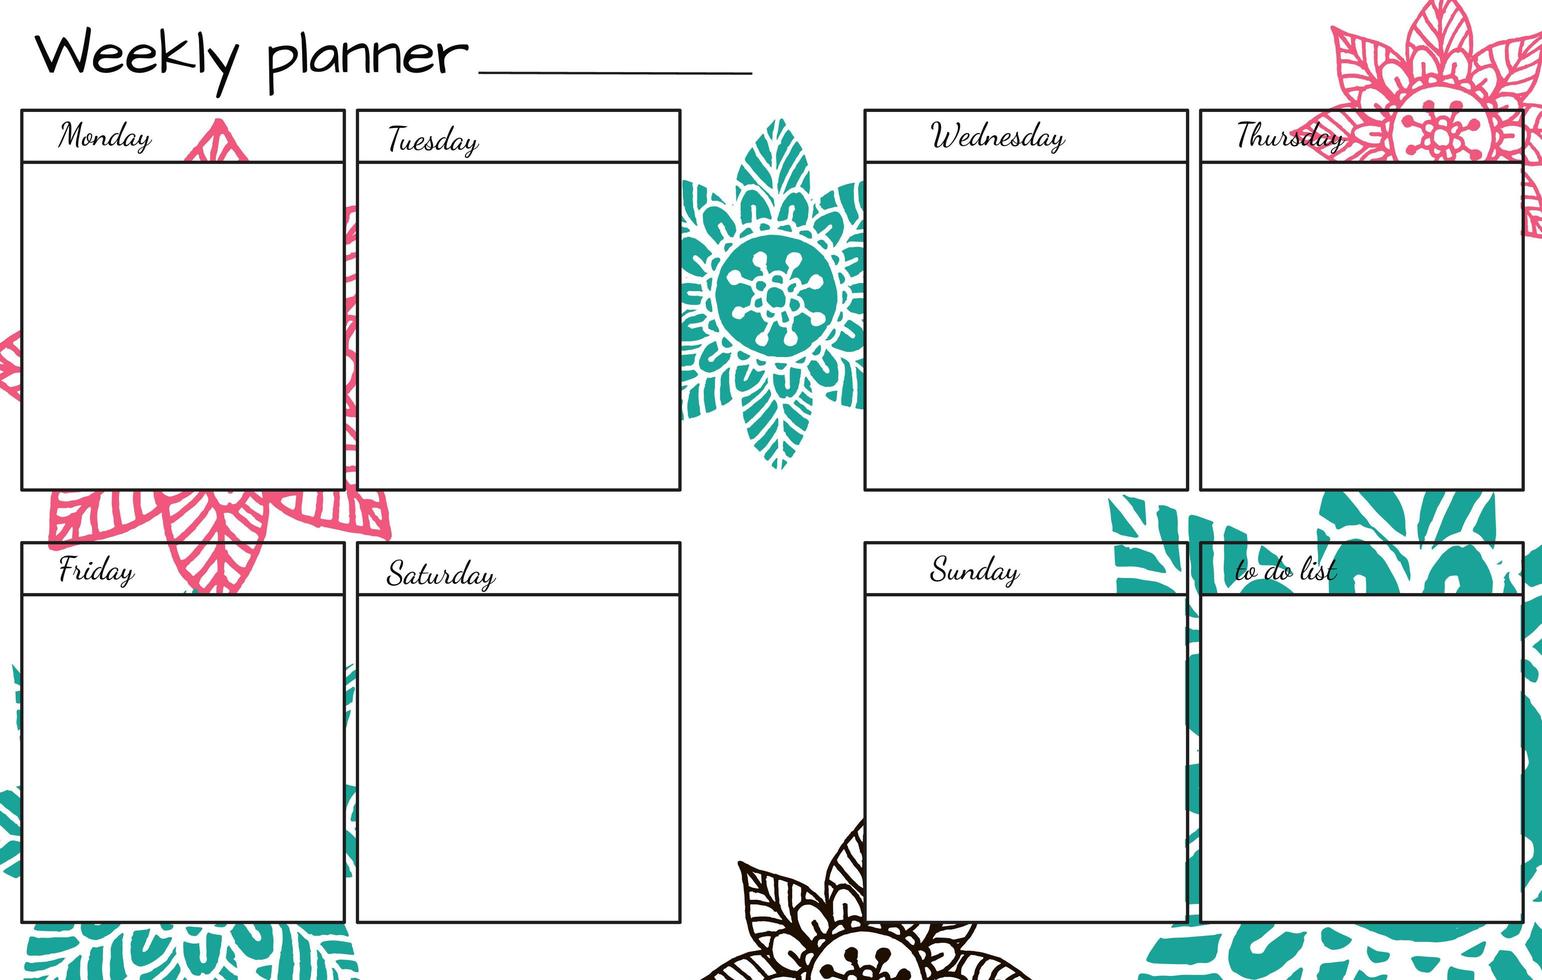 Weekly planner with Flower Mandala. vector